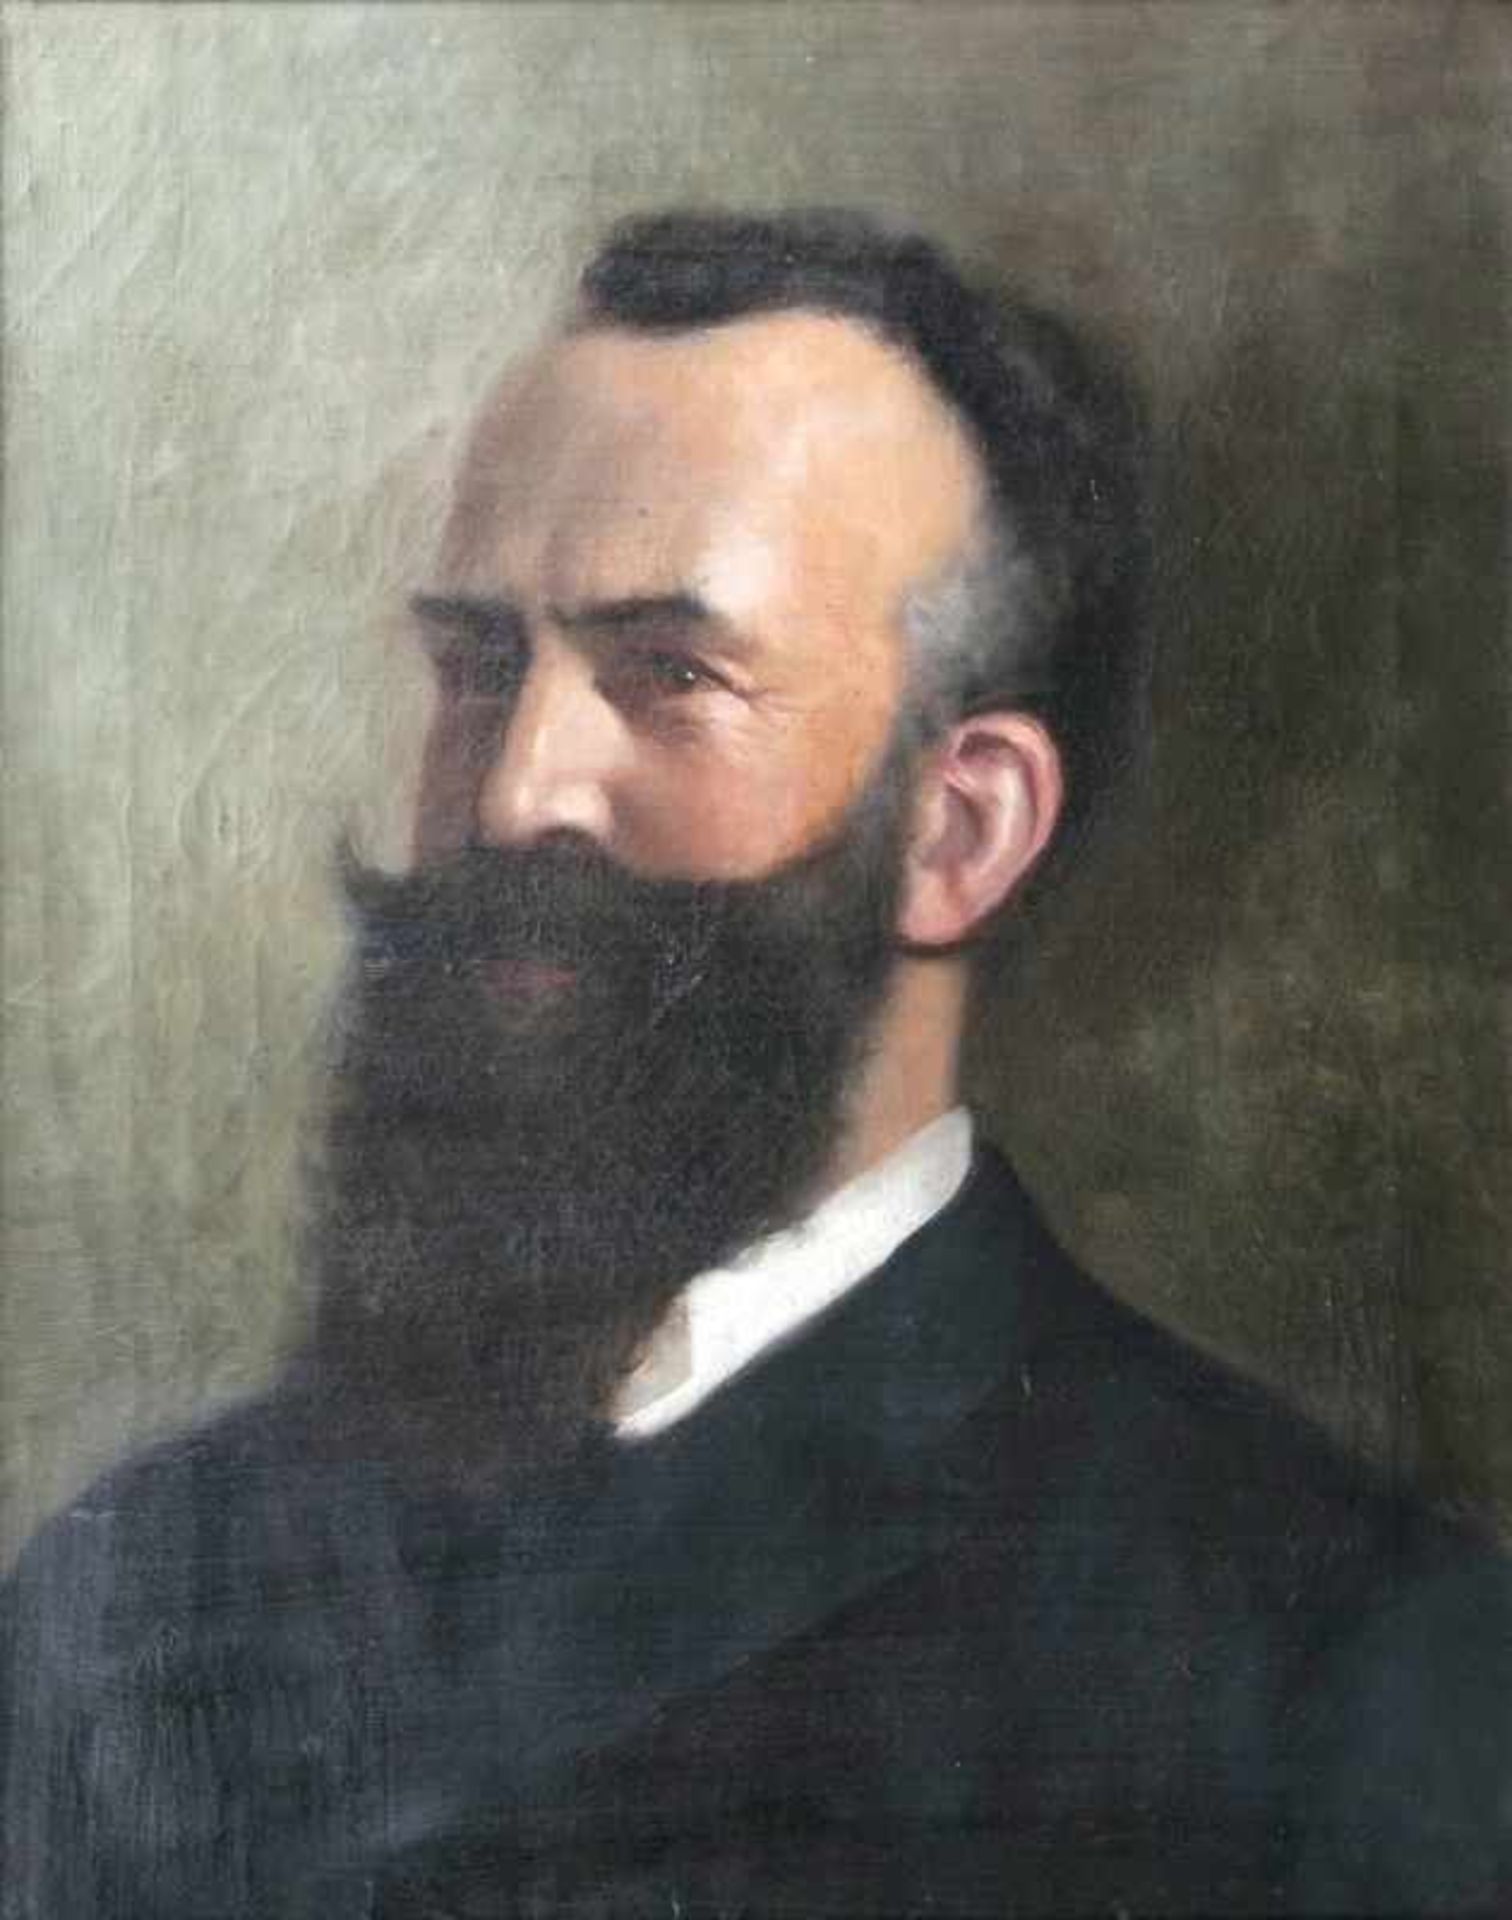 Portraitmaler tätig Anfang 20. Jh. Theodor Herzl Öl/Lw., 53,5 x 44 cm. - Theodor Herzl war der